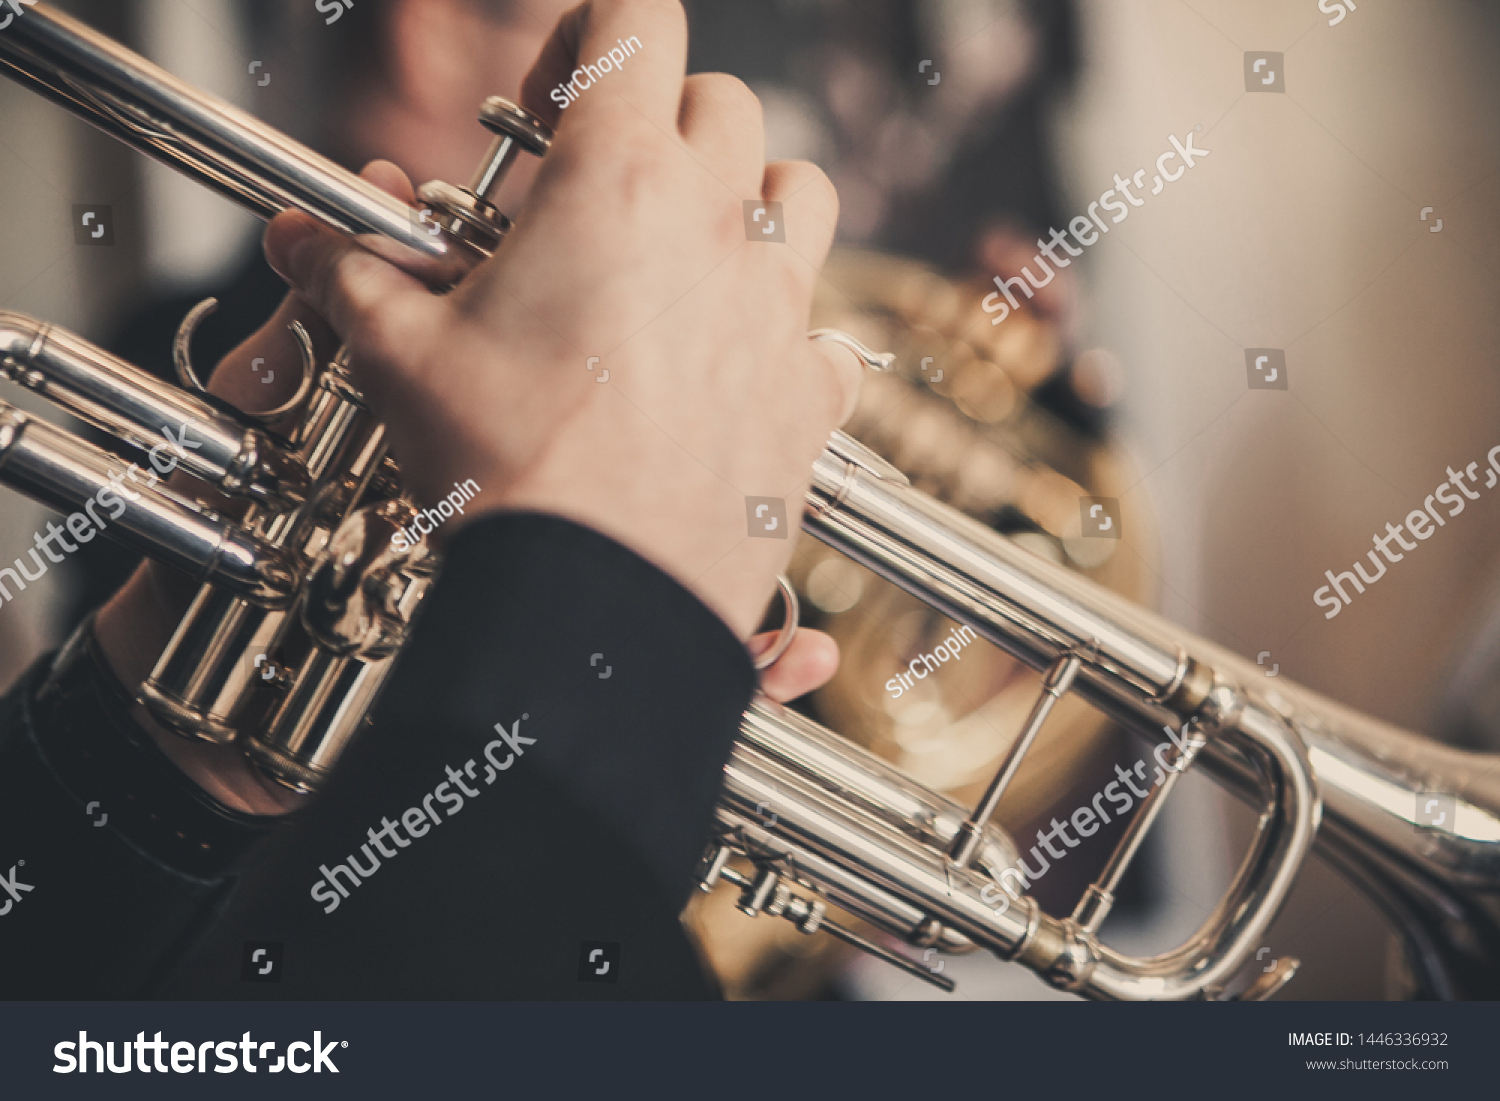 The musician plays a brass instrument - Trumpet #1446336932